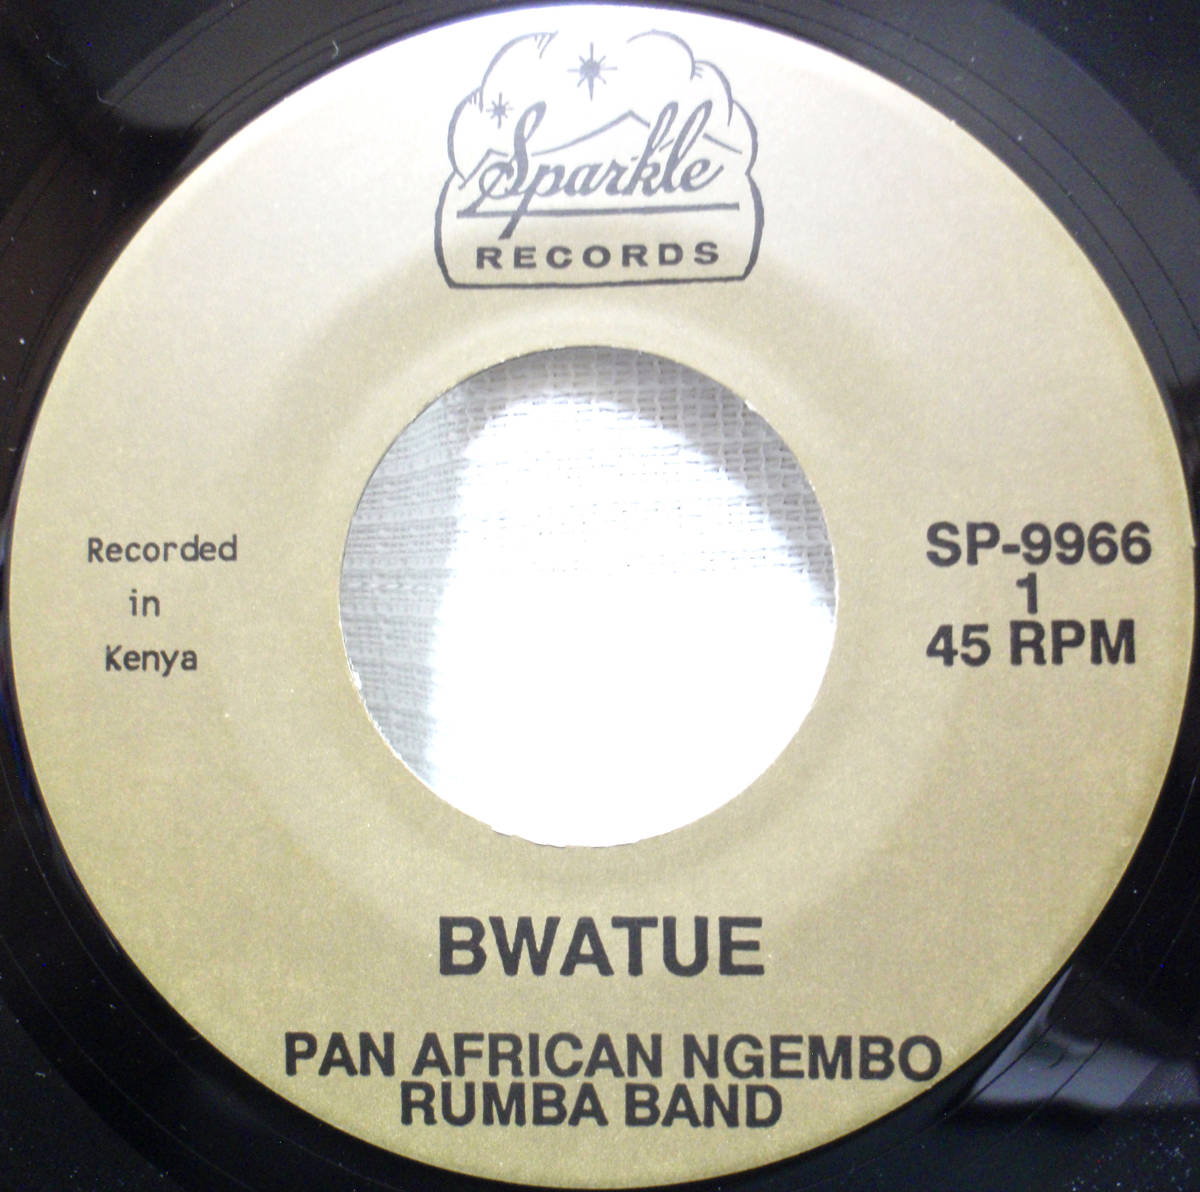  прослушивание редкий запись kenia запись 7inch. PHIL OCHS with PAN AFRICAN NGEMBO RUMBA BAND - RECORDED IN KENYA,1973*BWATUE / NIKO MCHUMBA NGOMBE